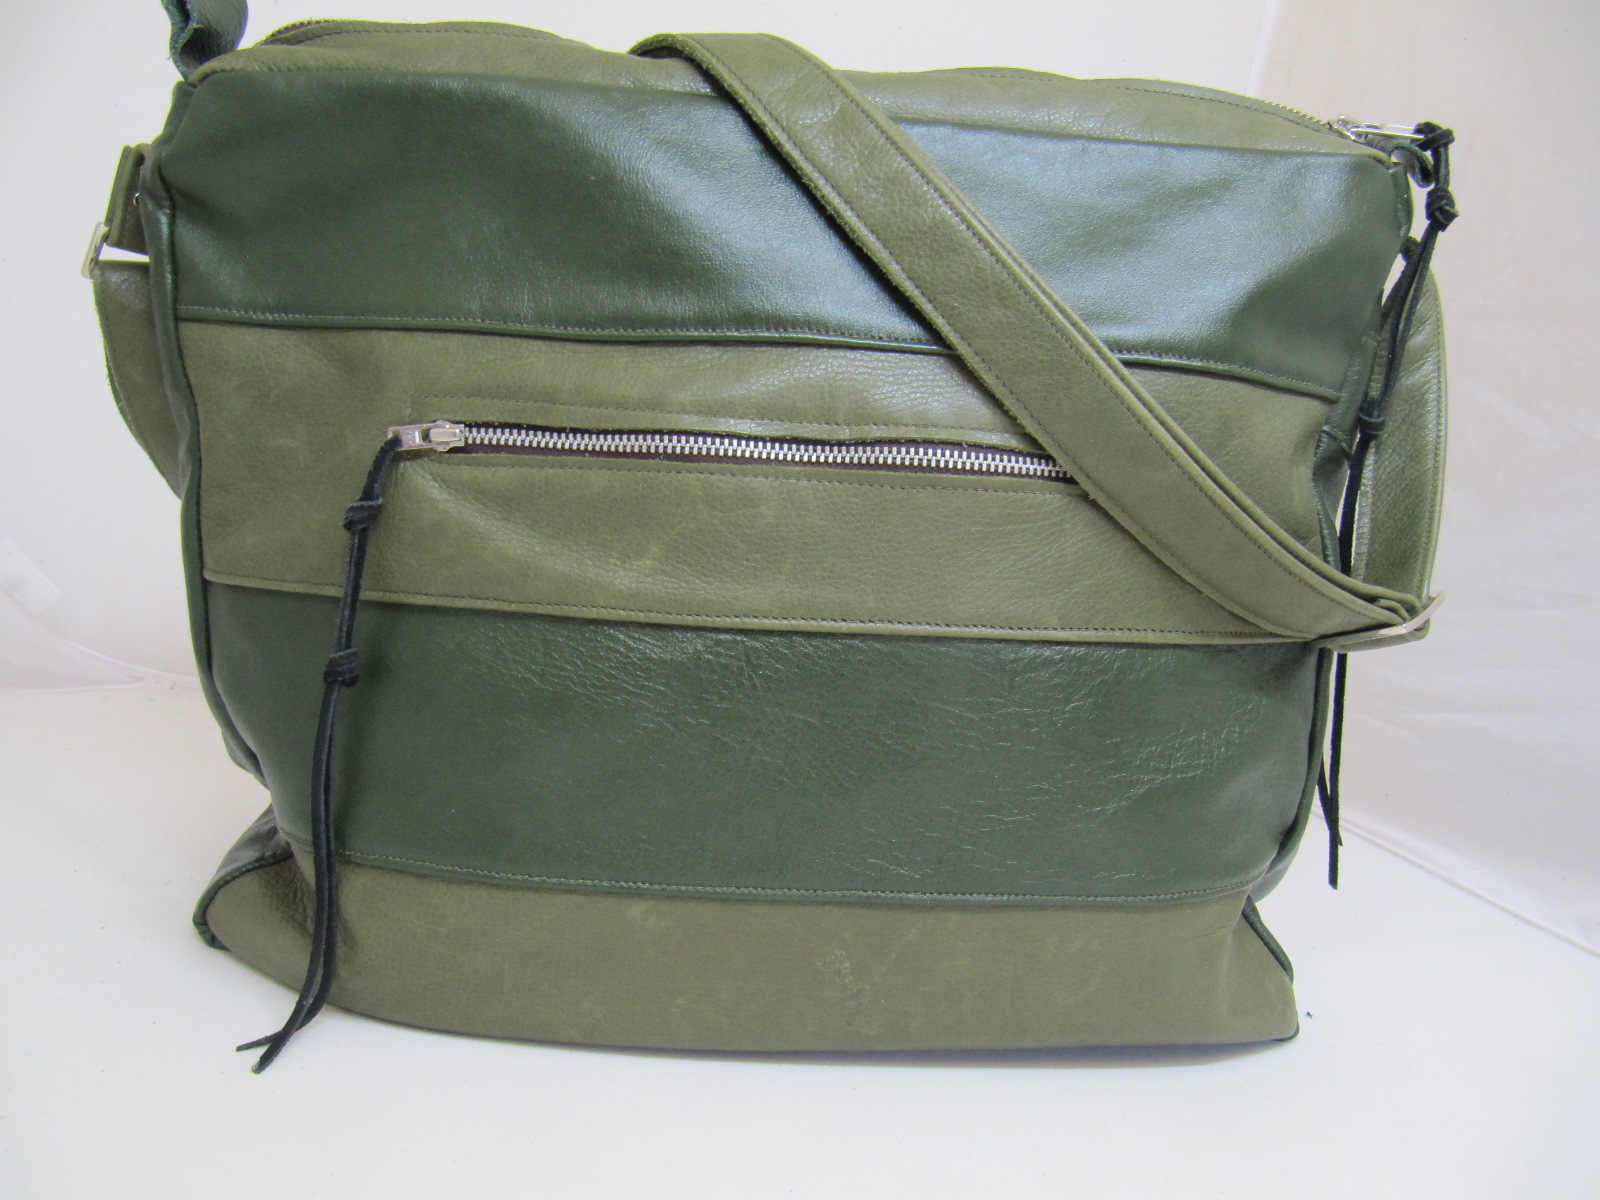 Two tone soft green leather panel handbag